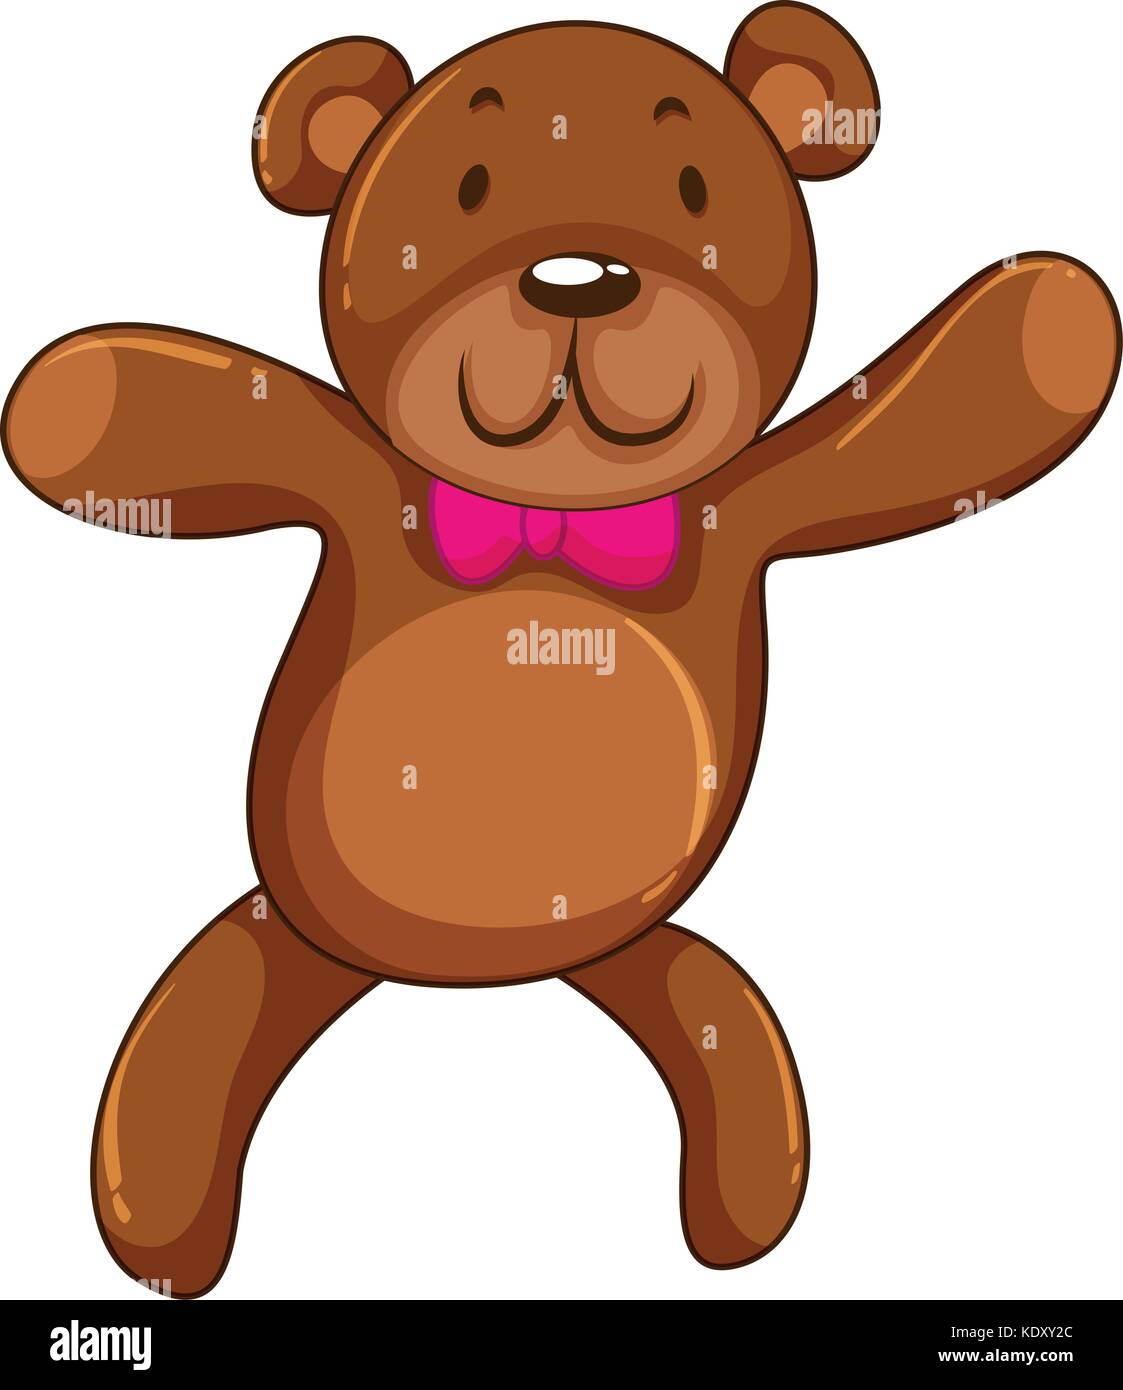 Cuddling teddy bear Stock Vector Images - Alamy